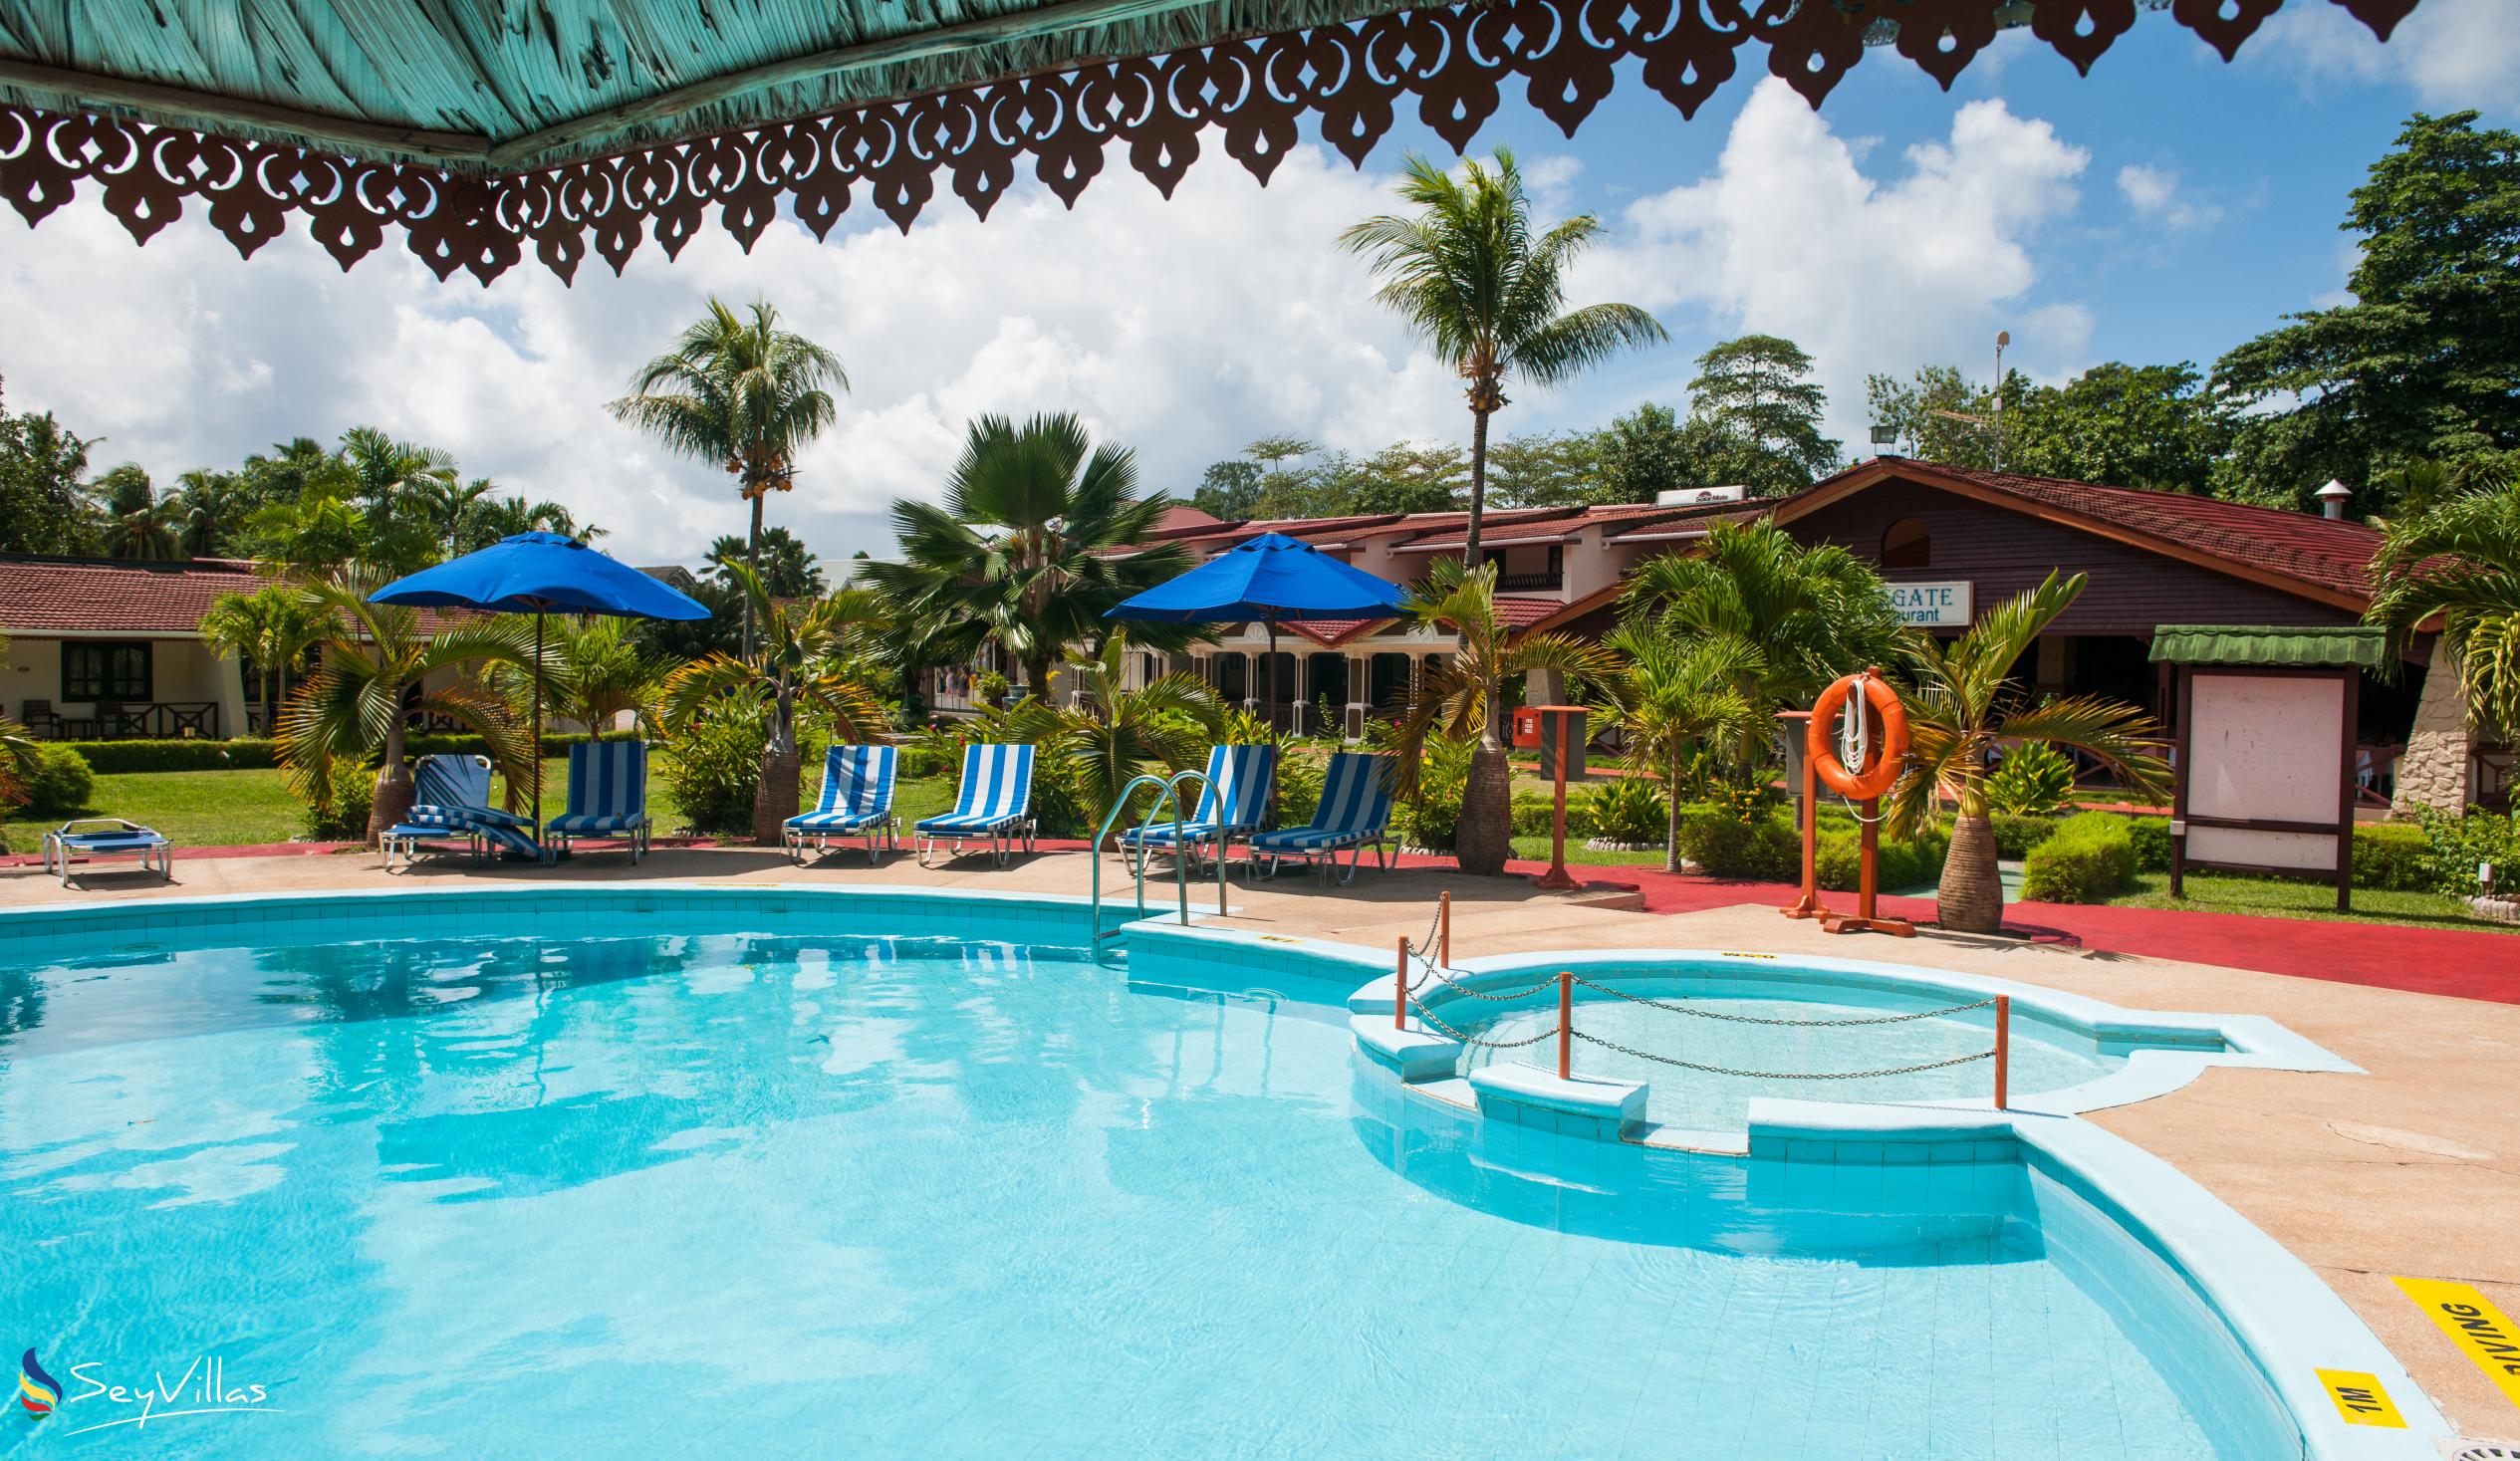 Photo 3: Berjaya Praslin Resort - Outdoor area - Praslin (Seychelles)